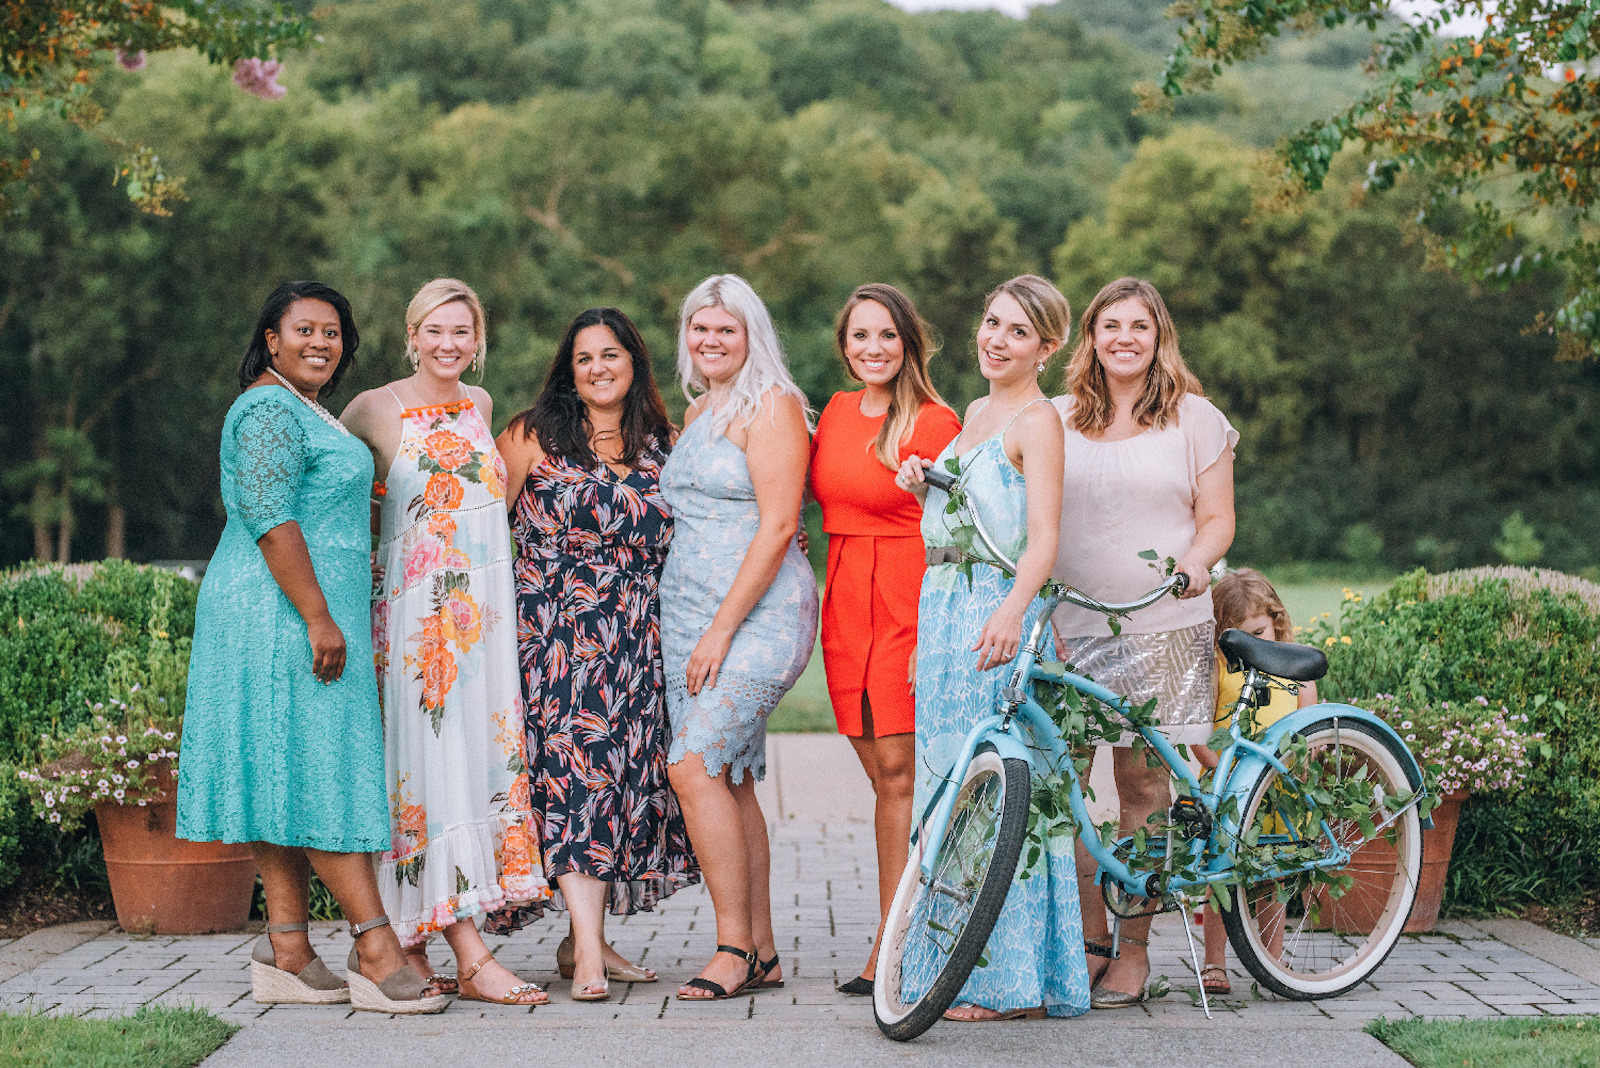 Meet the Nashville Wedding Planner's Group on Nashville Bride Guide!